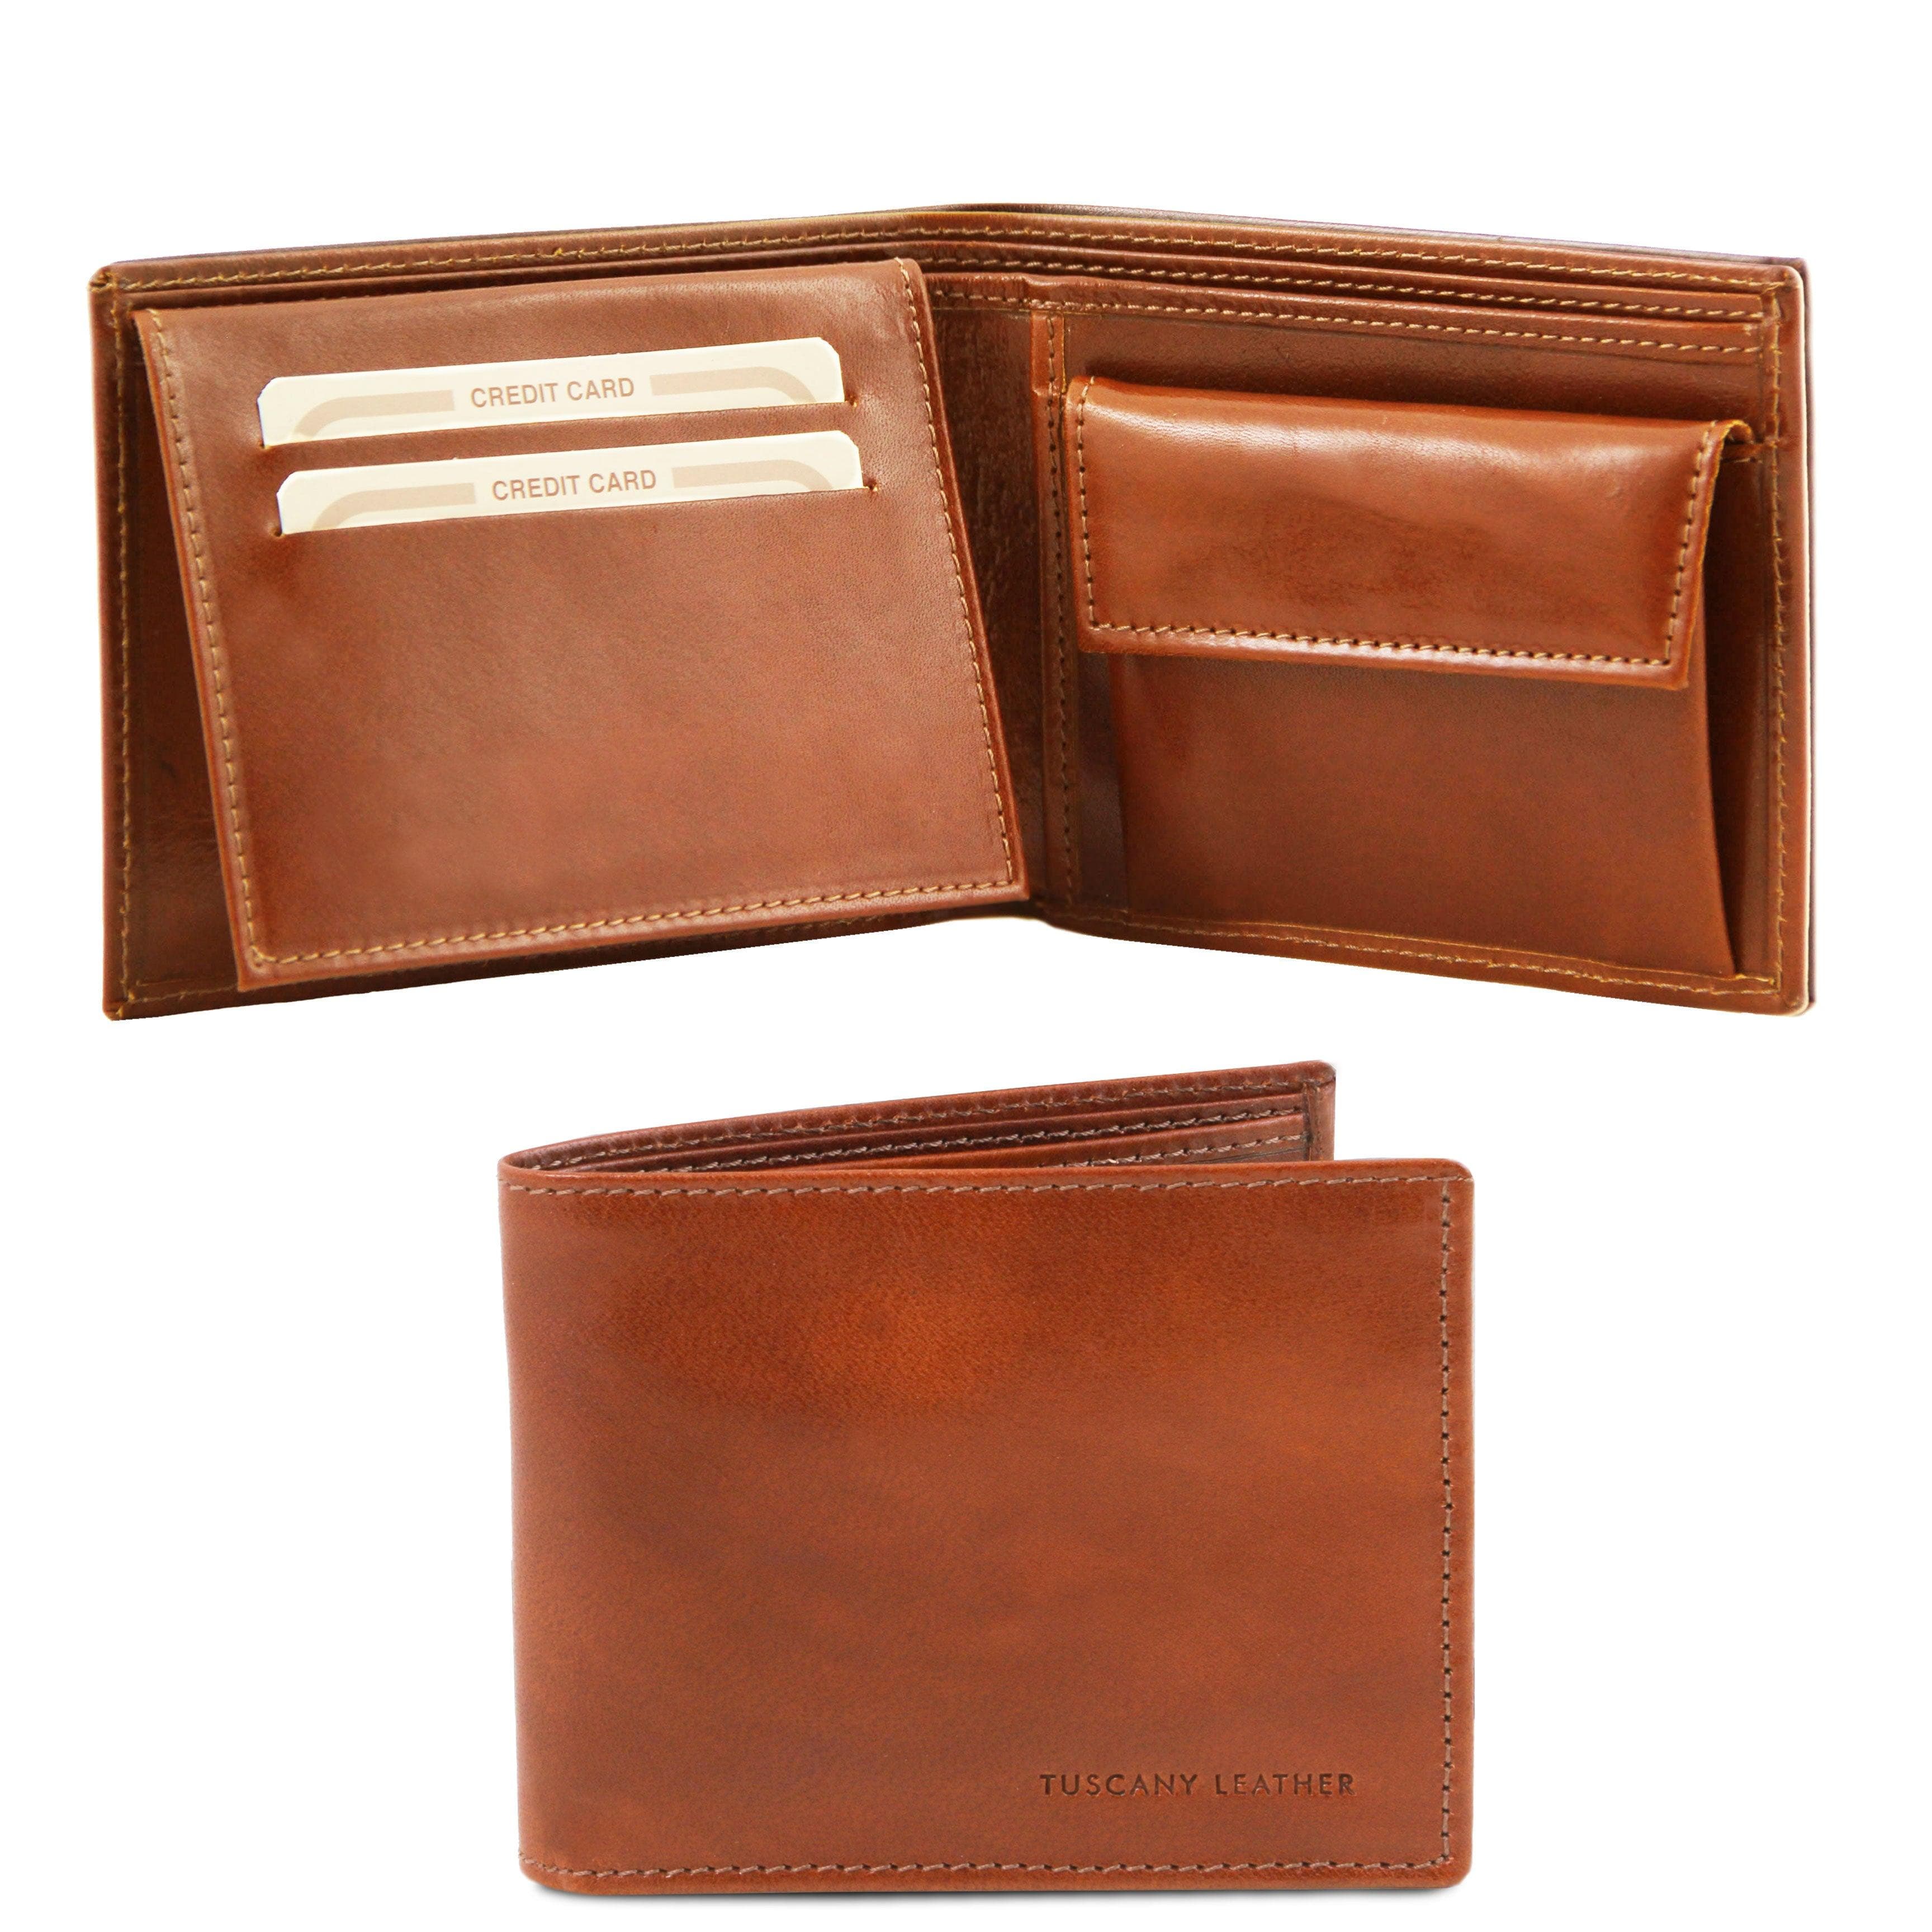 Buy Baggit Men's 3 Fold Wallet - Small (Green) at Amazon.in